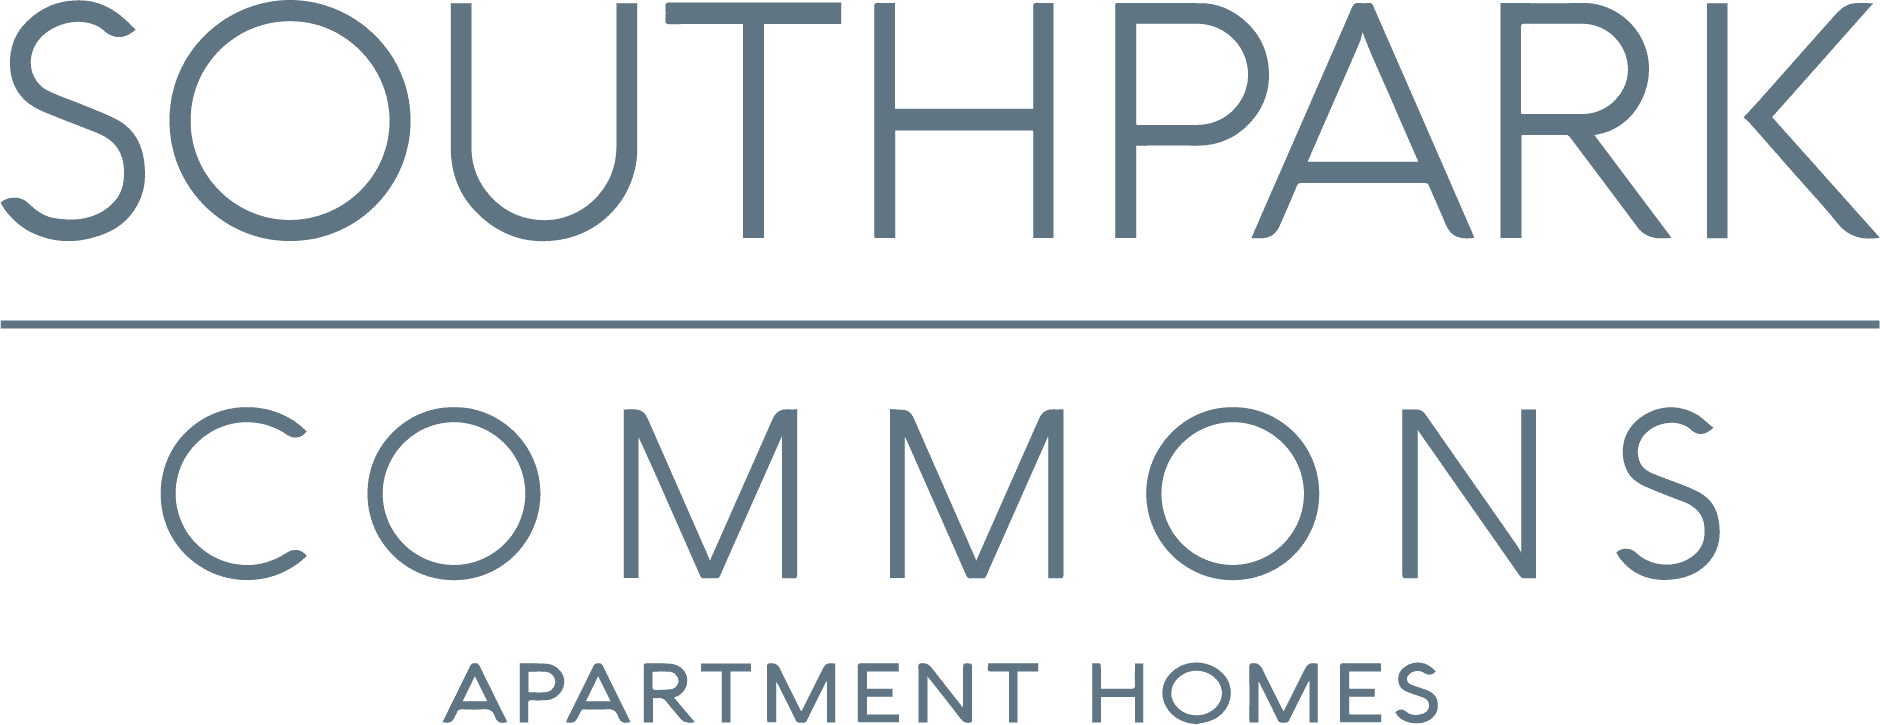 Southpark Commons Apartment Homes Logo